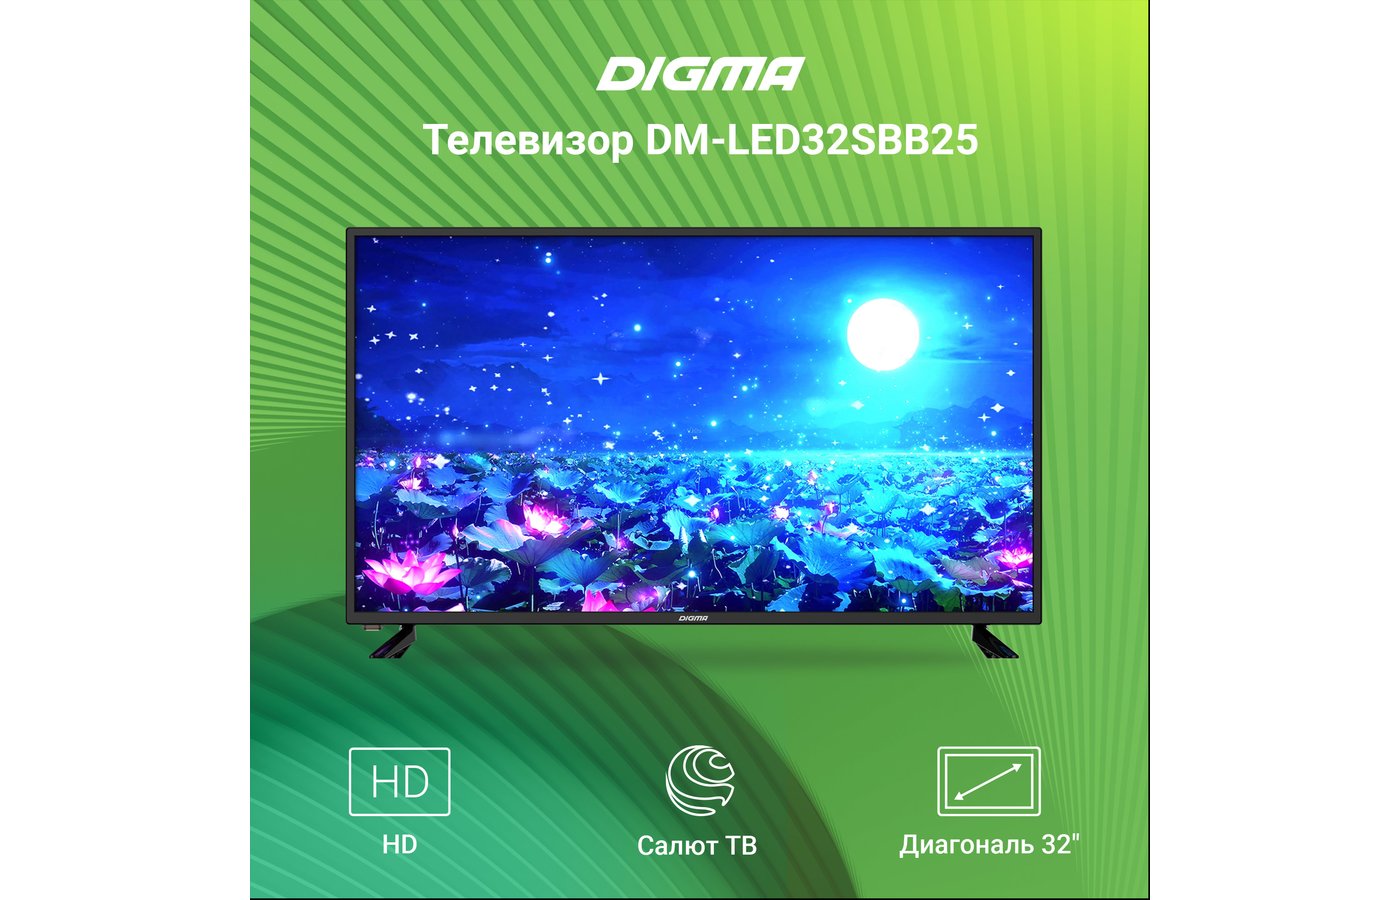 Digma DM-led40sbb25 led. Телевизор Digma DM led32sbb25. 40" Телевизор Digma DM-led40mq11. DM-led40sbb25 характеристики. Телевизор digma 32